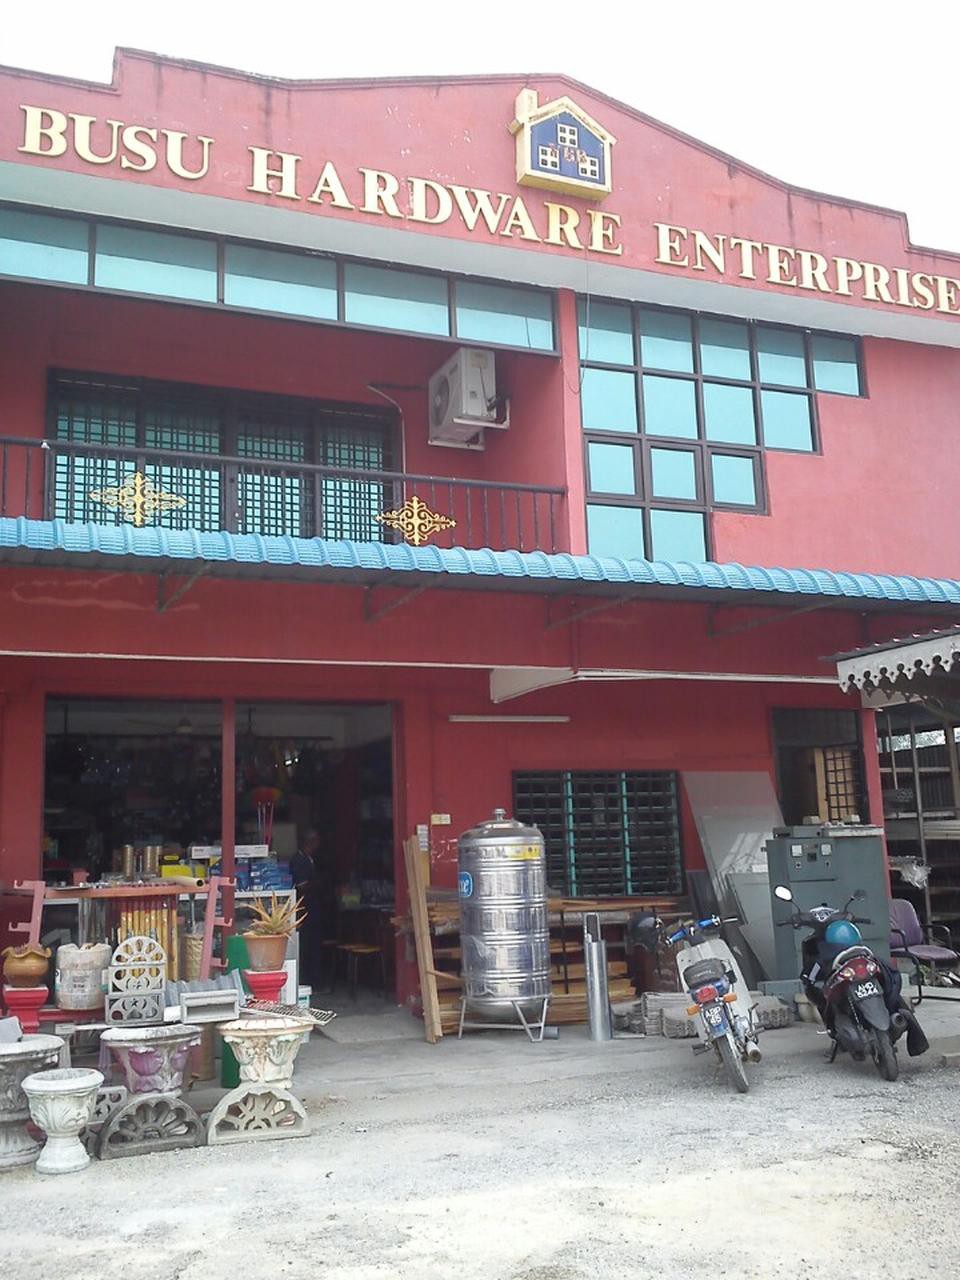 Busu Hardware Enterprise